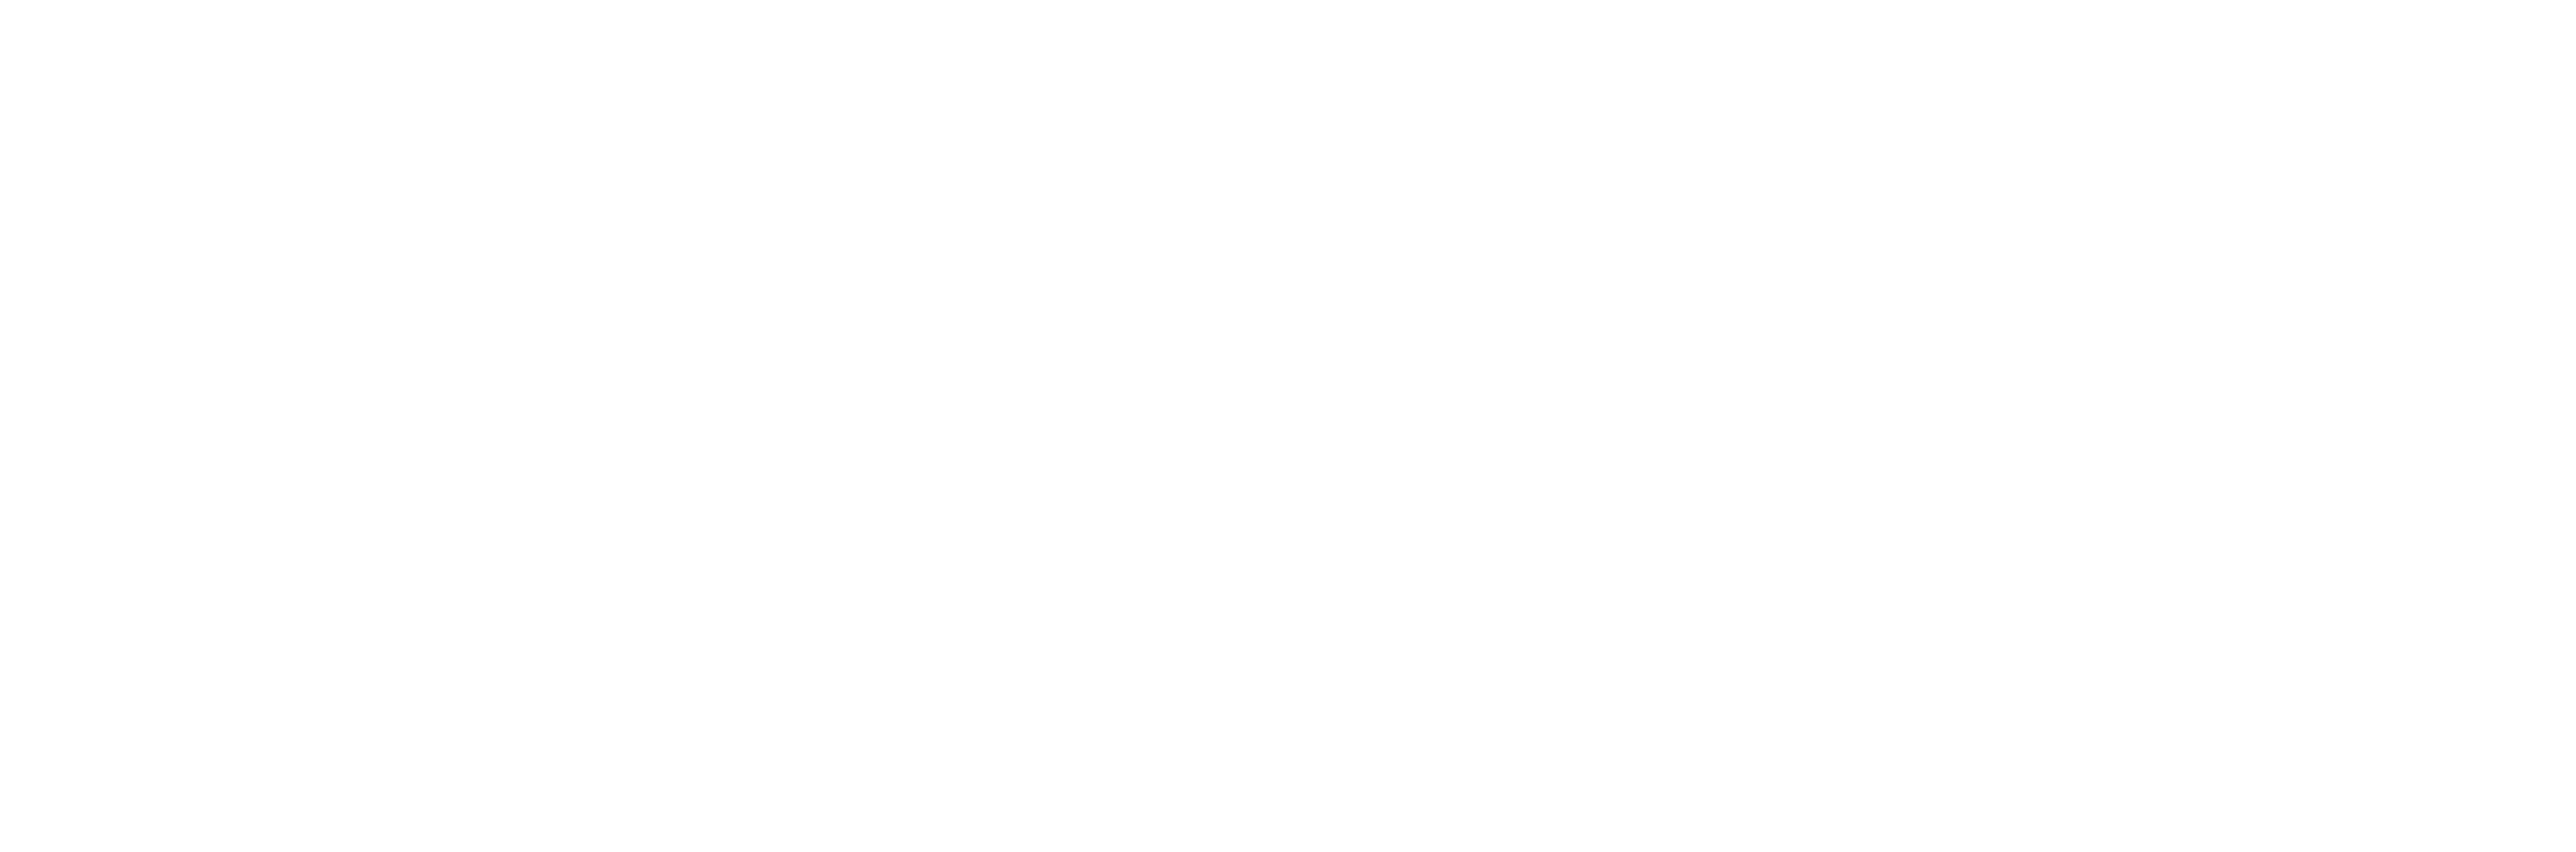 MACAM Tunis - Musée National d'Art Moderne et Contemporain